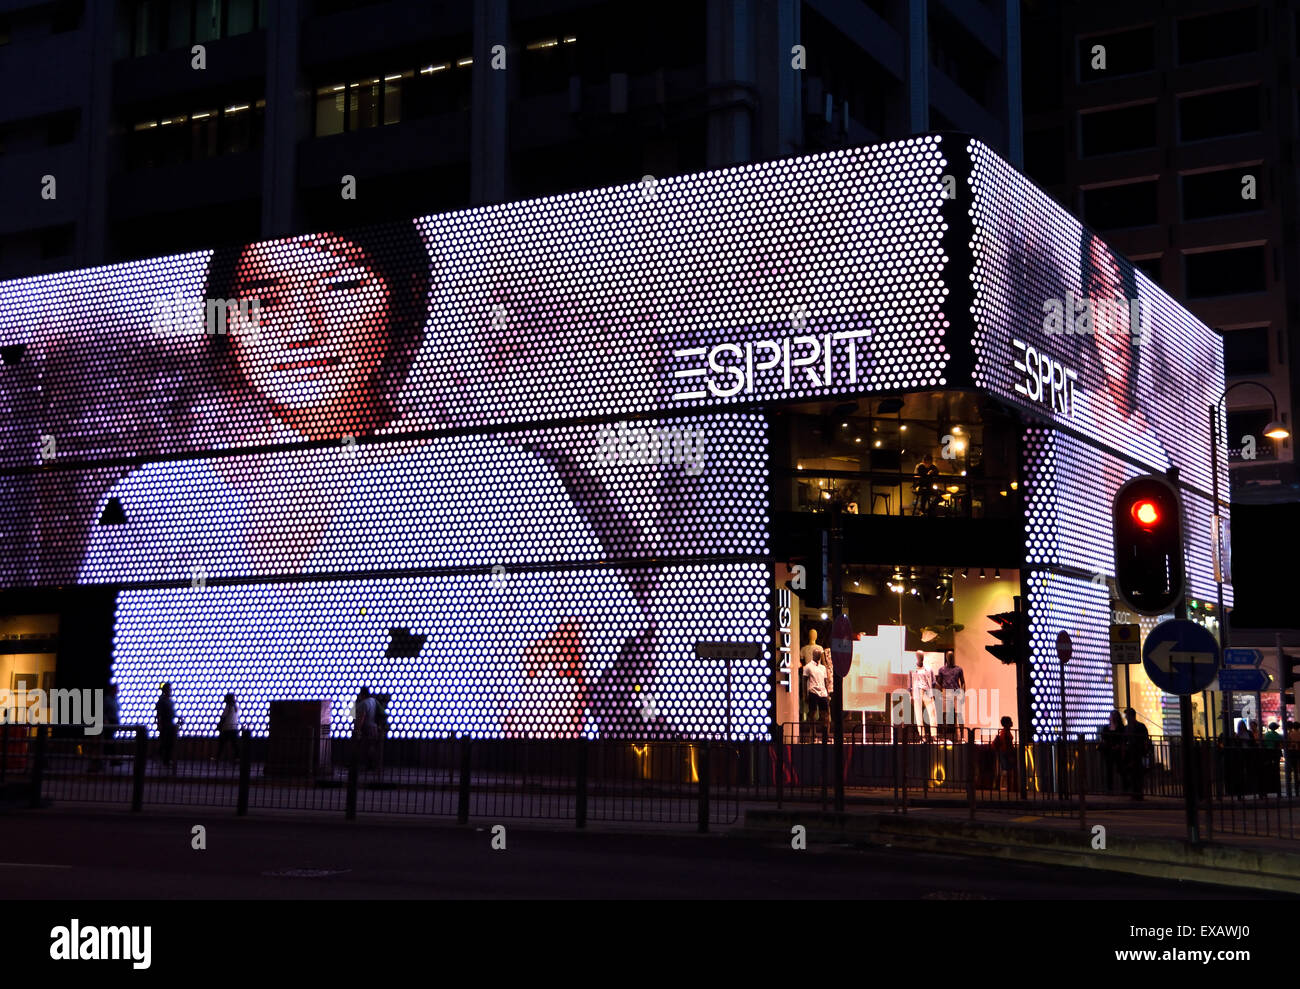 Esprit Fashion Store Hong Kong Kowloon - Sim Sha Tsui - China Chinese Stock Photo: 85062152 - Alamy